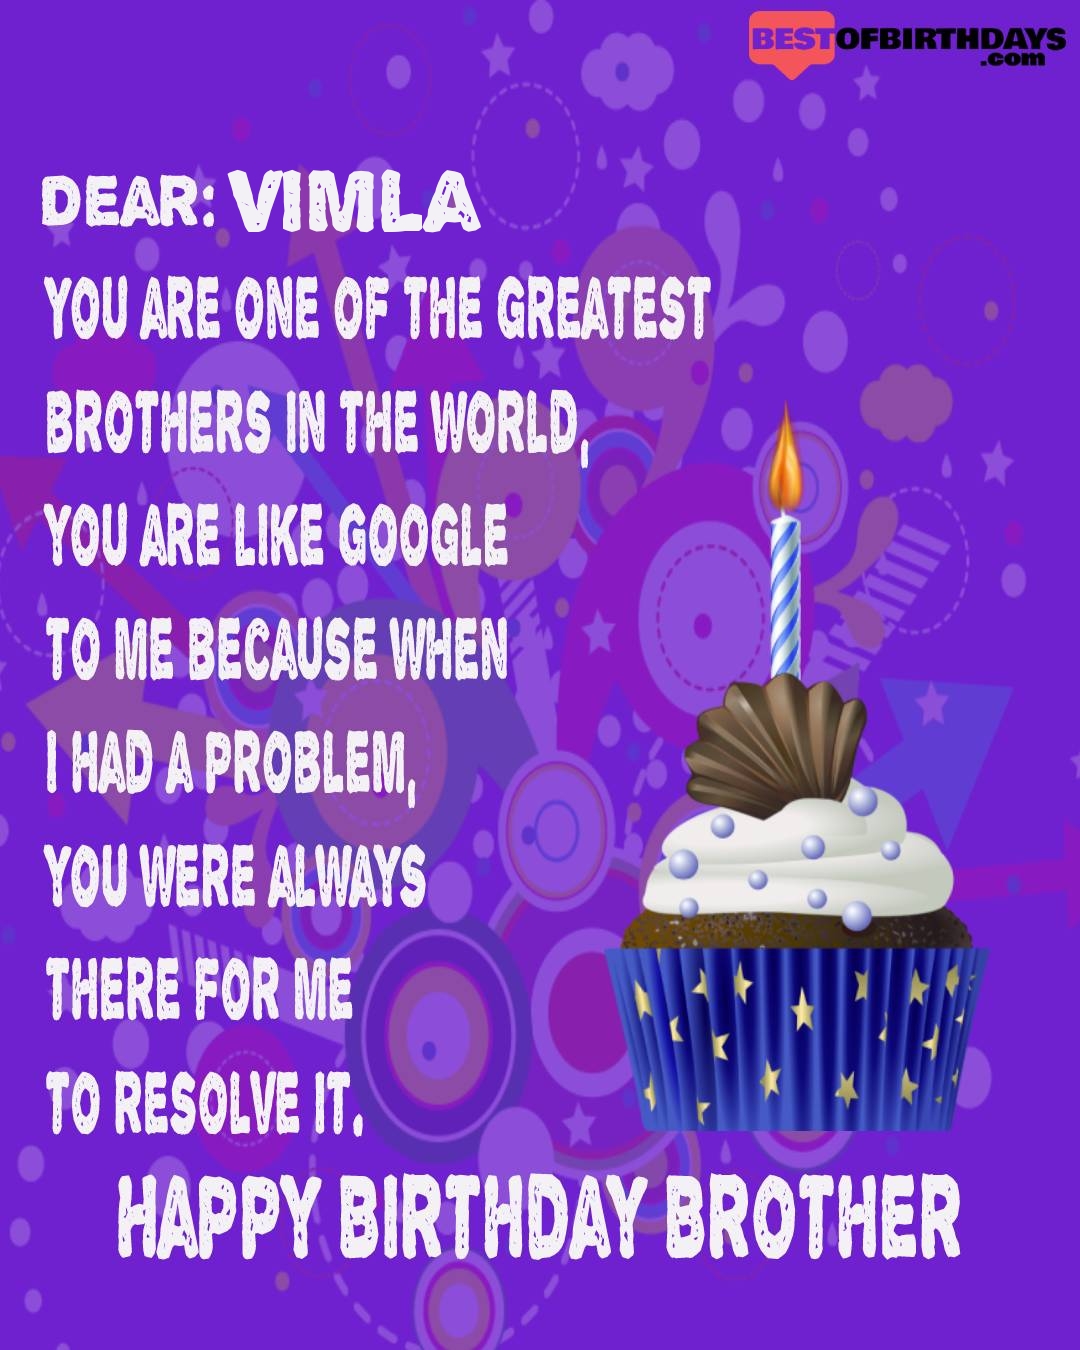 Happy birthday vimla bhai brother bro